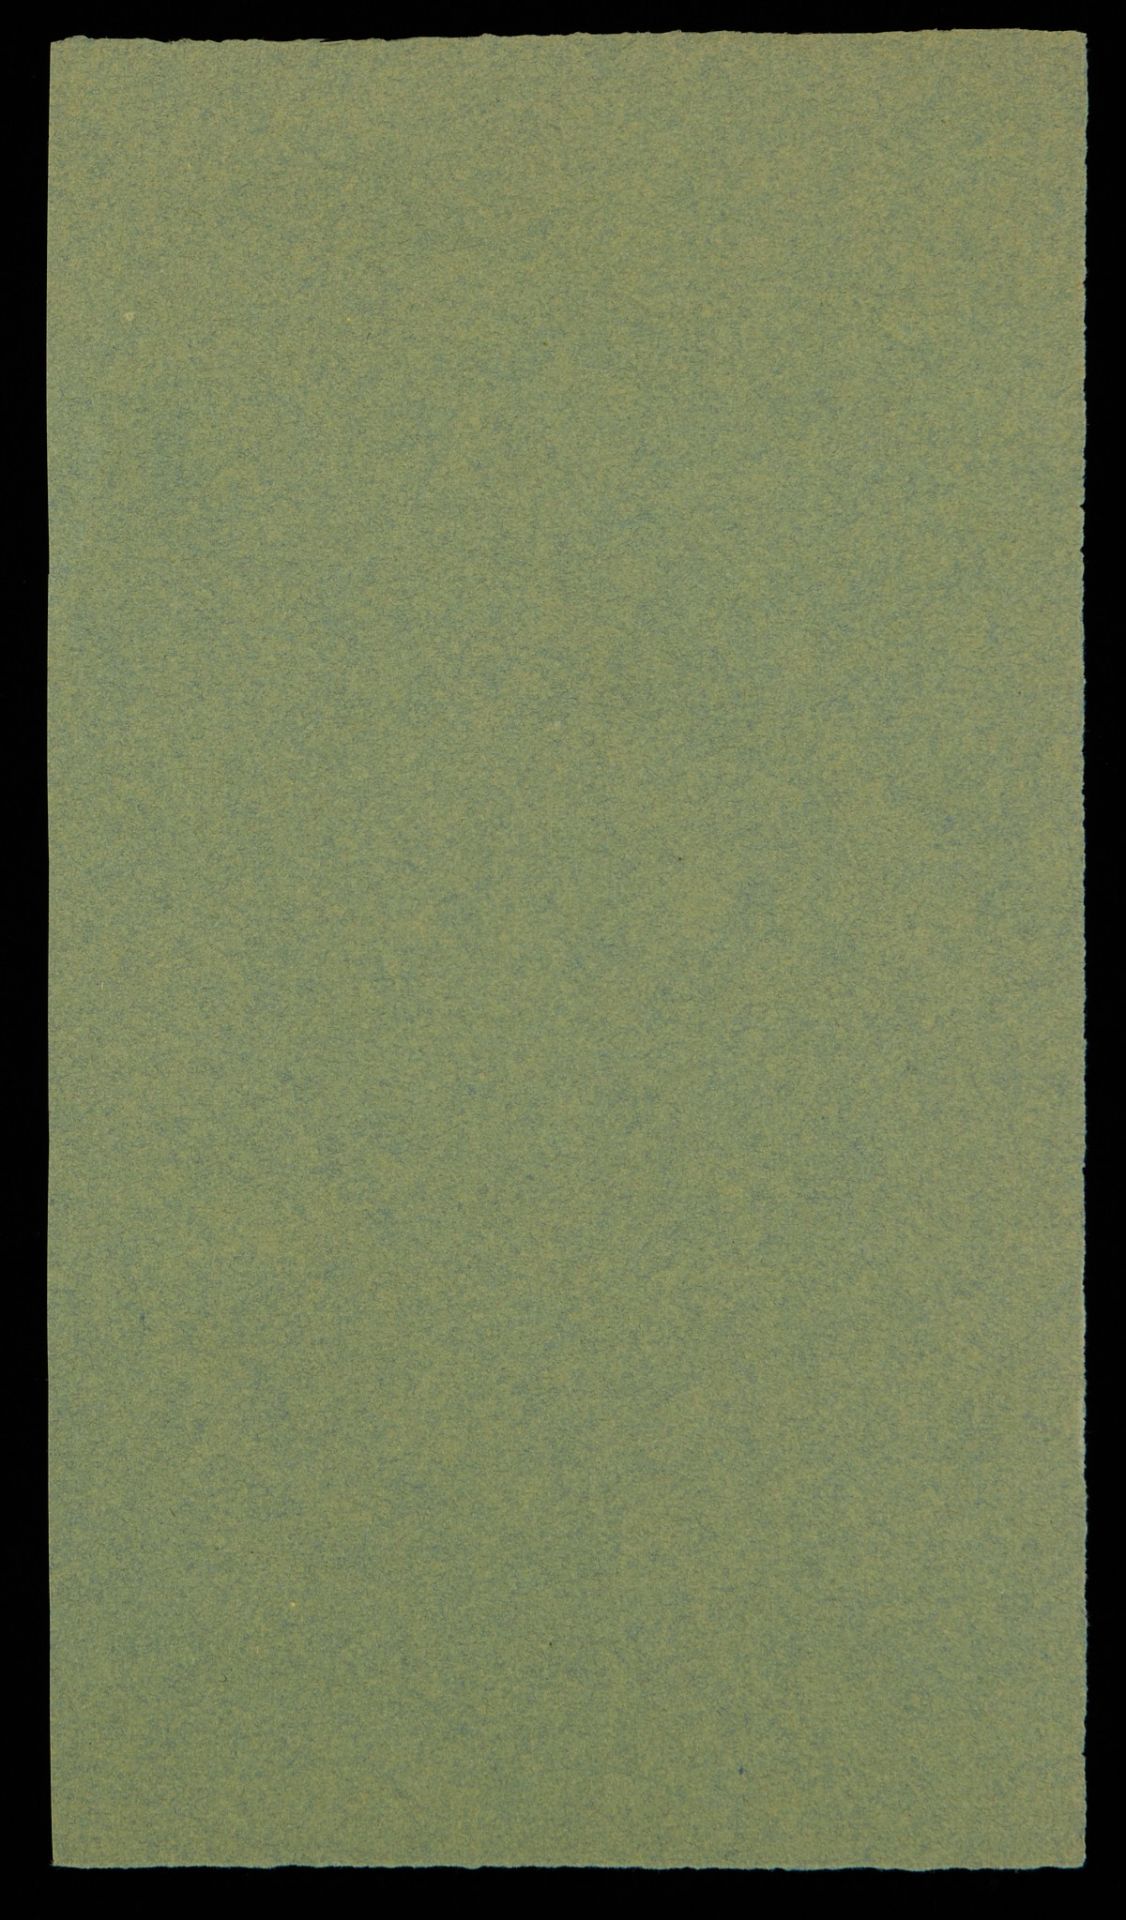 Paul Cadmus Male Nude Crayon on Green Paper - Bild 3 aus 3